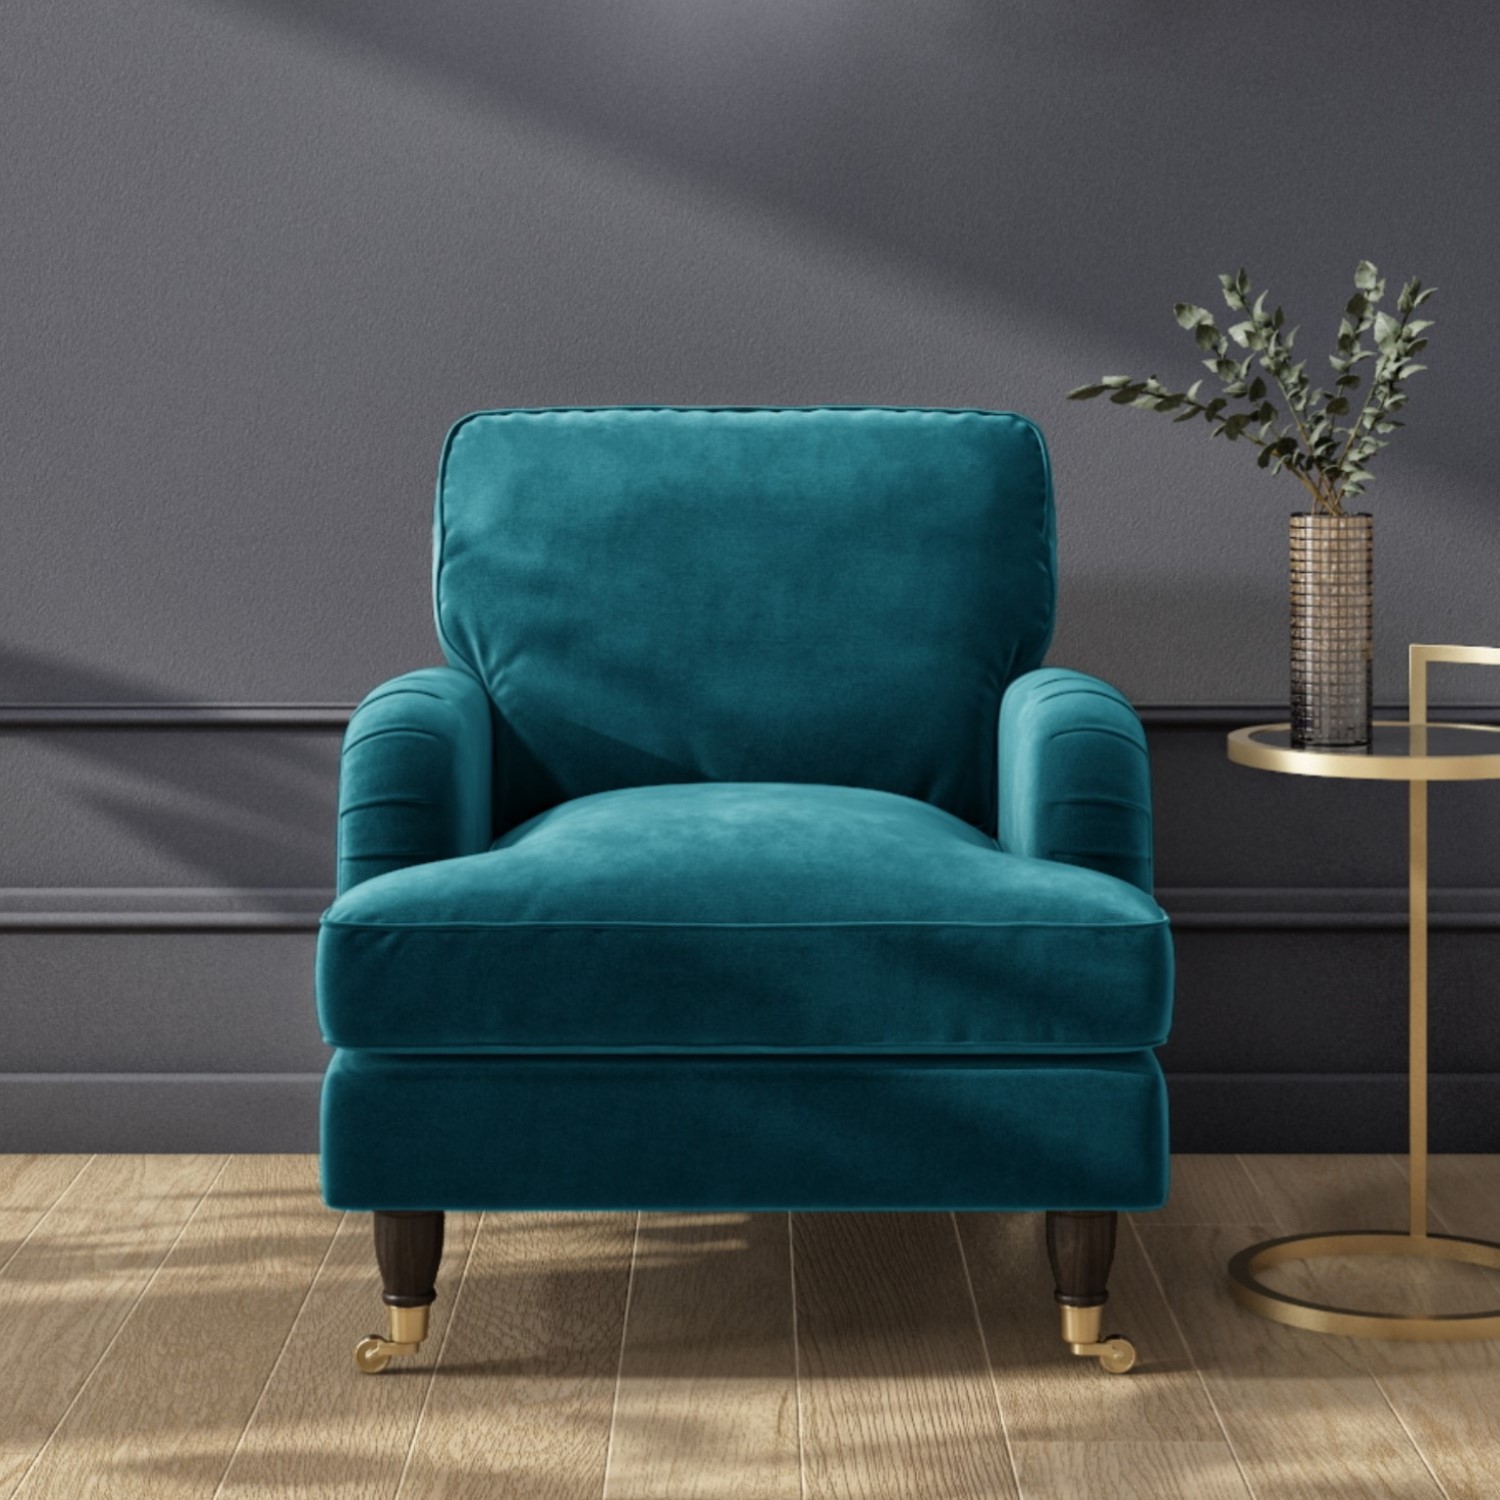 Photo of Teal velvet armchair - payton